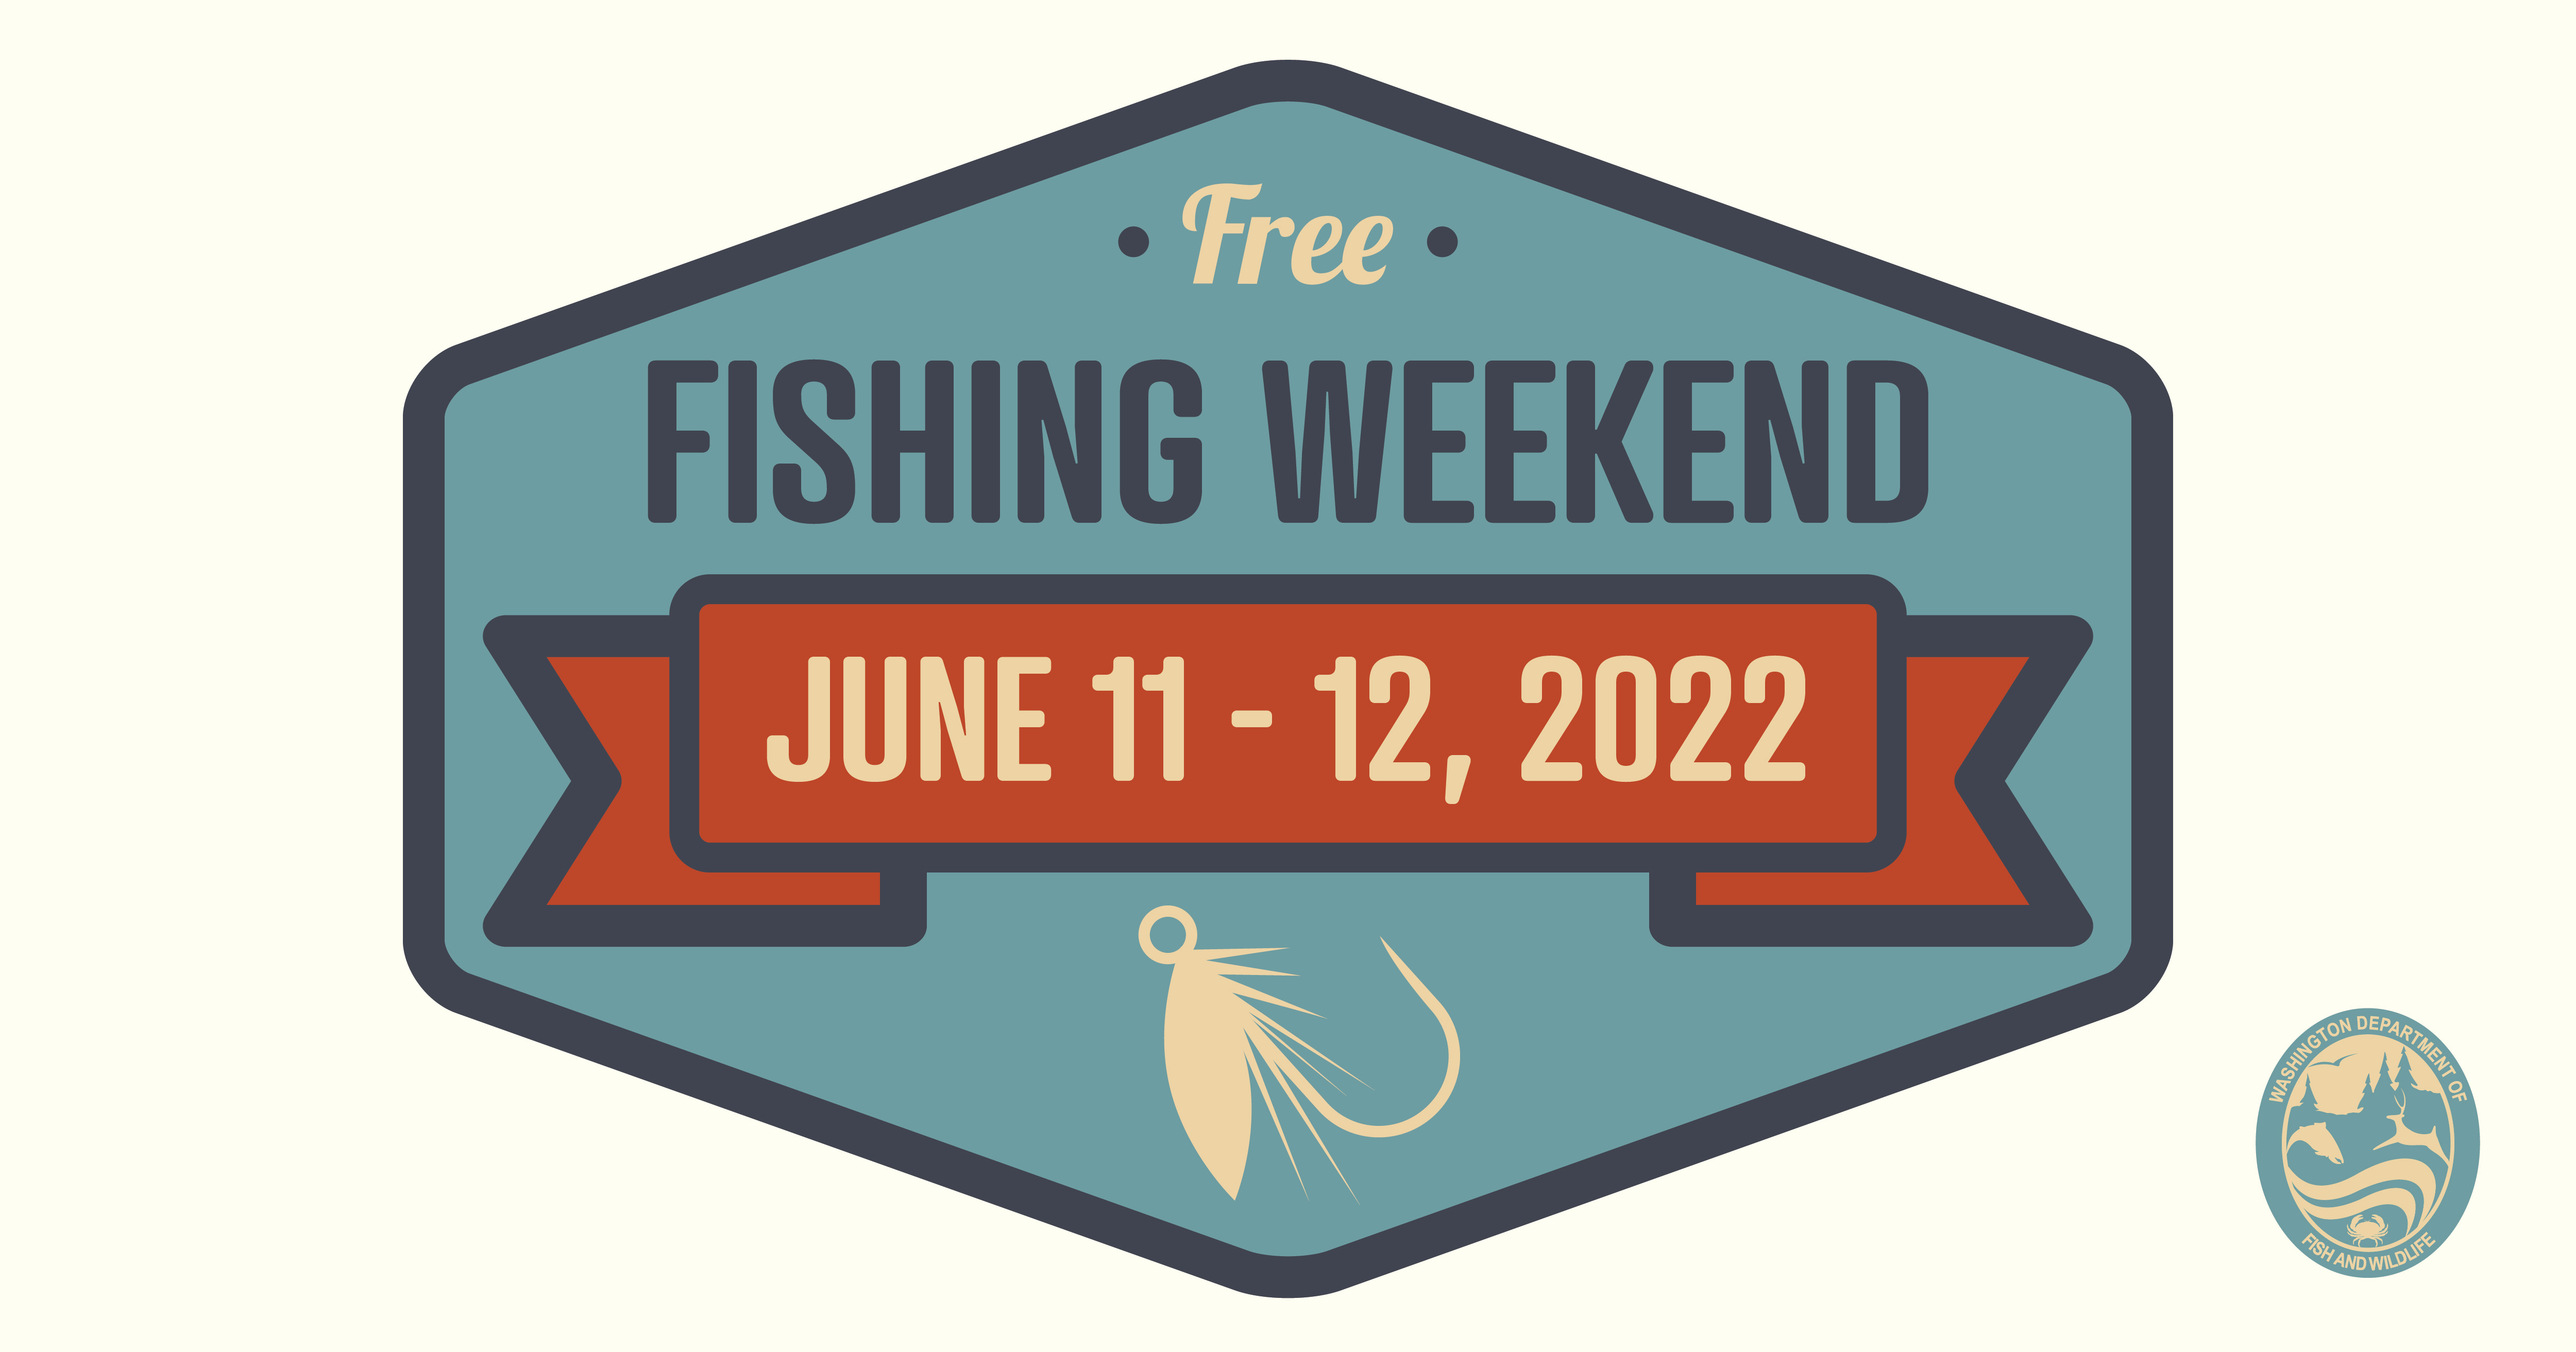 Washington Free Fishing Weekend tradition continues June 1112